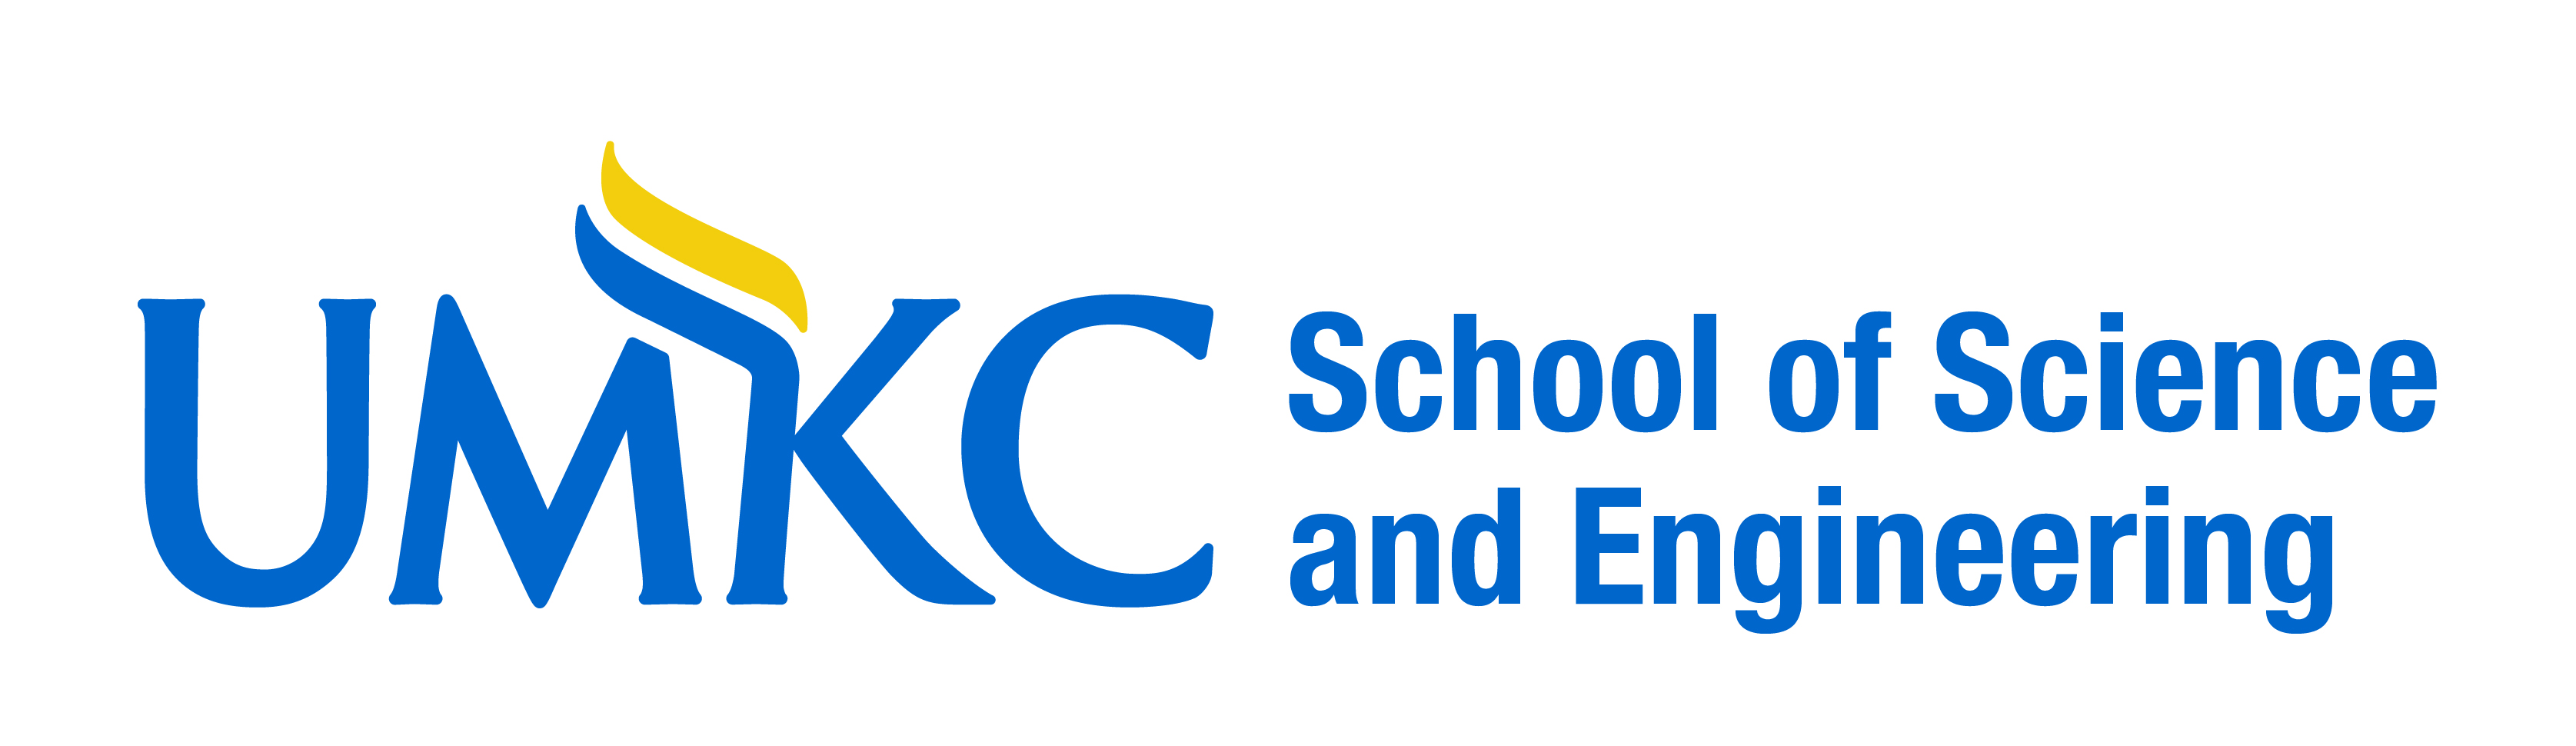 UMKC School of Science and Engineering logo